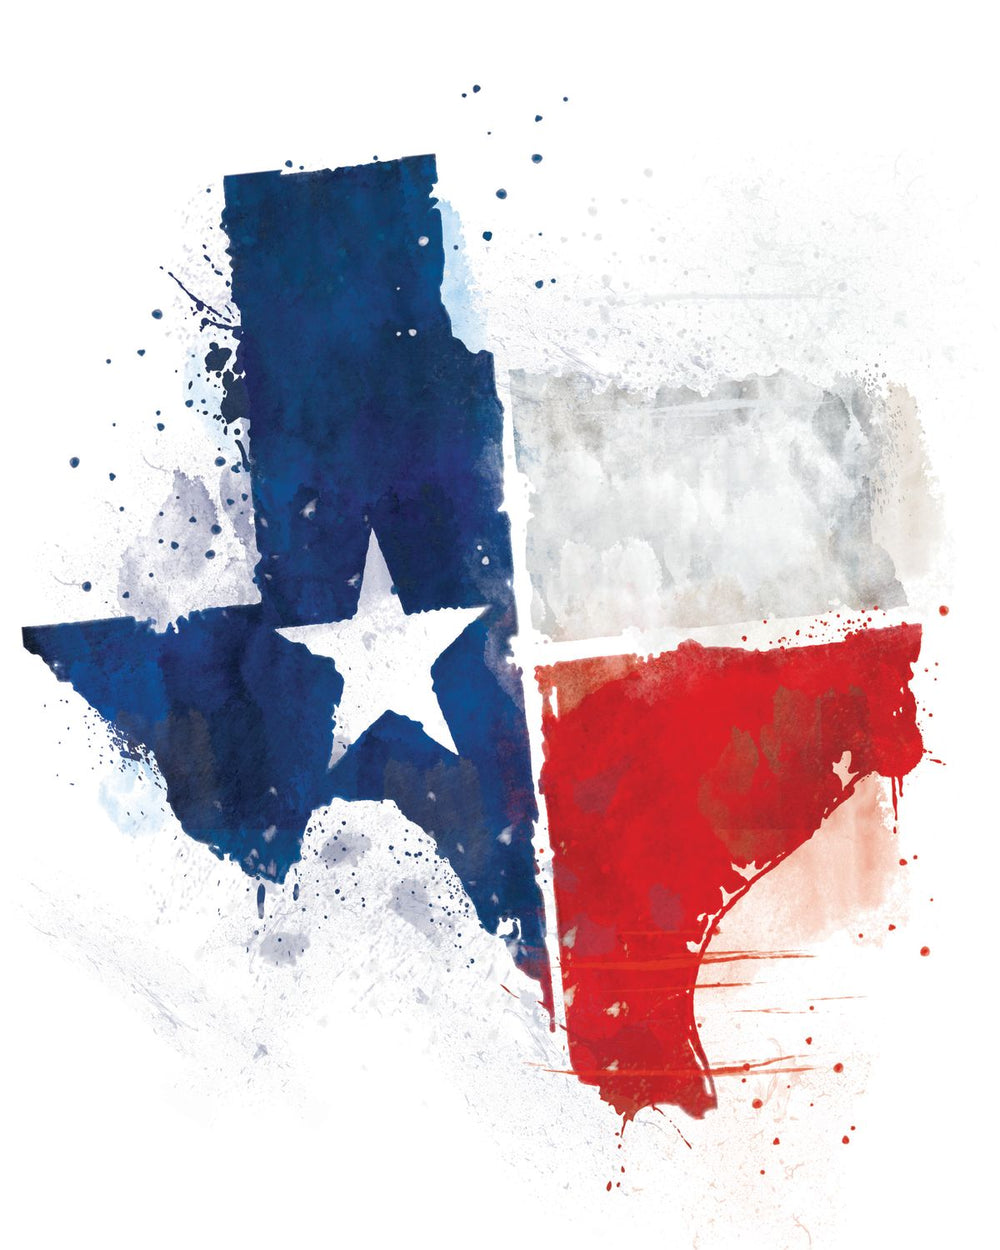 Abstract Texas Flag